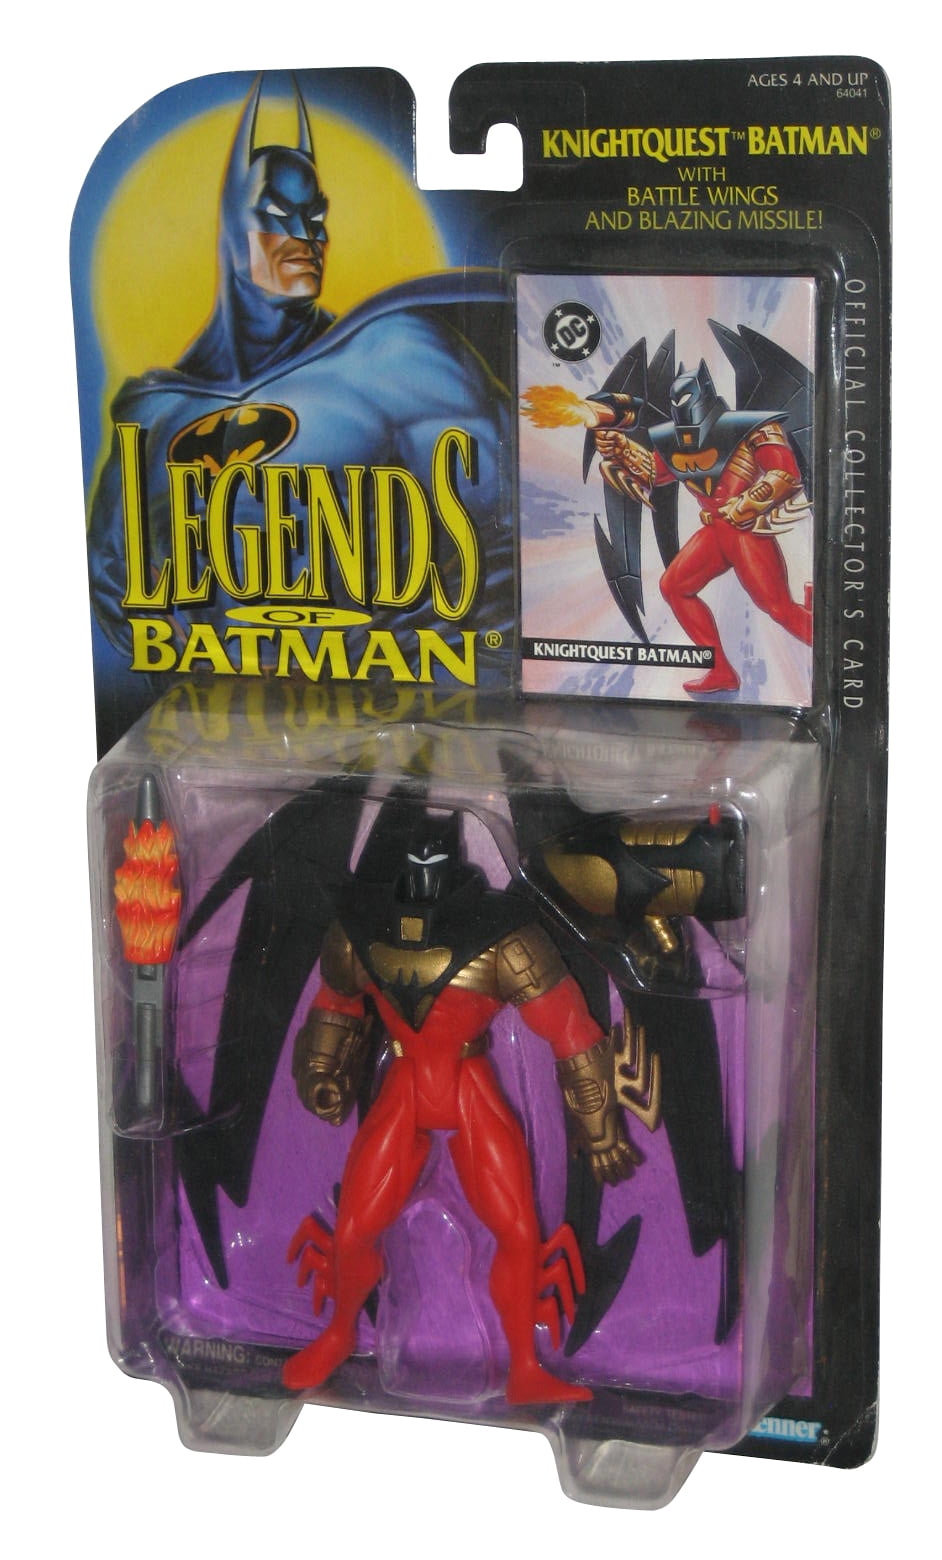 Kenner 1994 Legends of Batman Knightquest Action Figure for sale online 